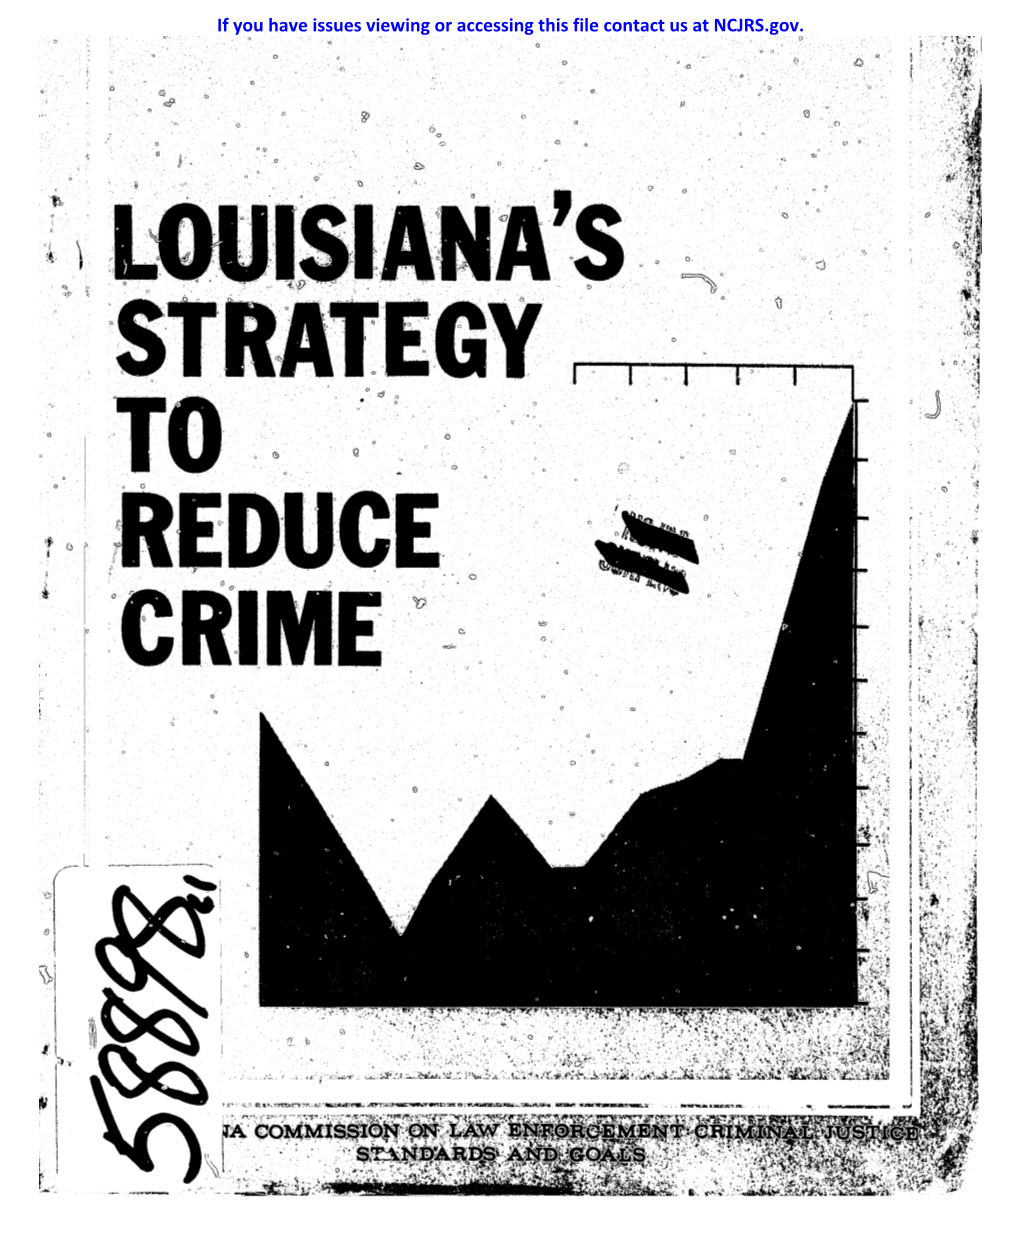 Louisiana (Johhission on Law Enforcement "